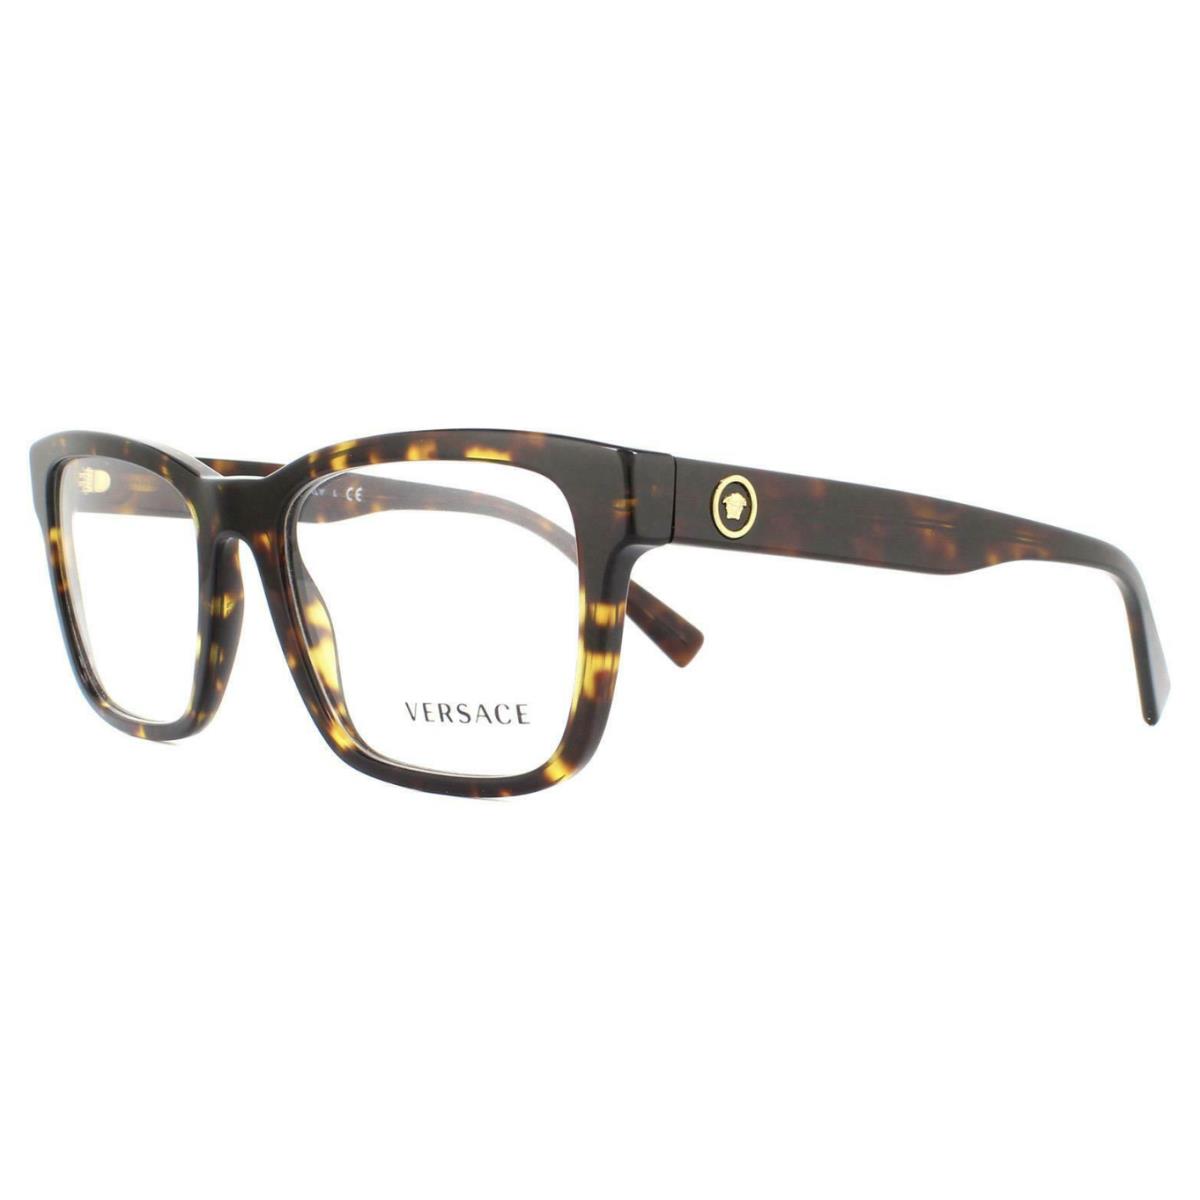 Versace Rx-able Eyeglasses VE Mod. 3285 108 53-19 140 Tortoise Gold Frames